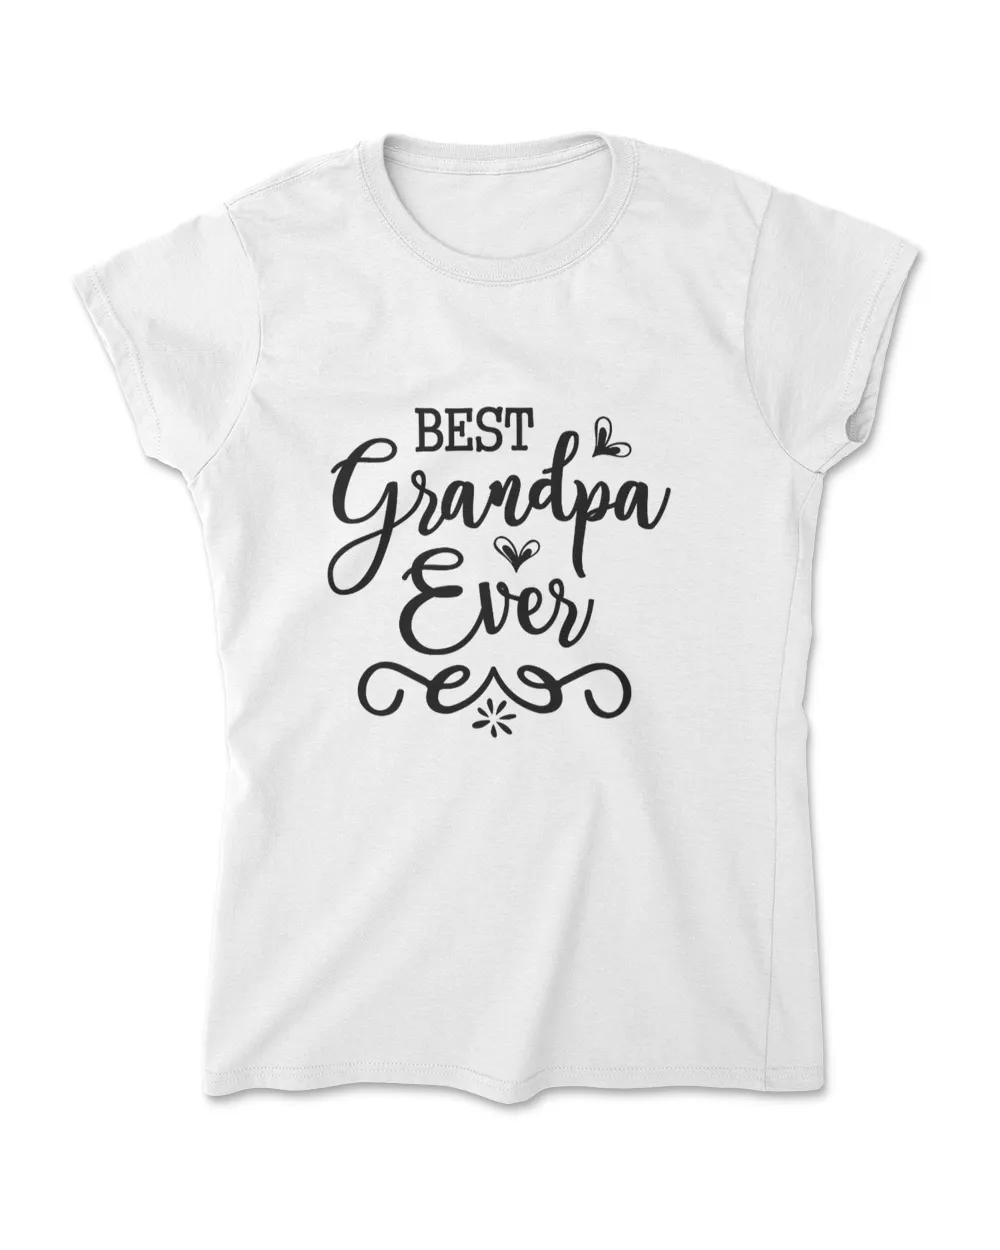 Best Grandpa Ever And Heart T-Shirt